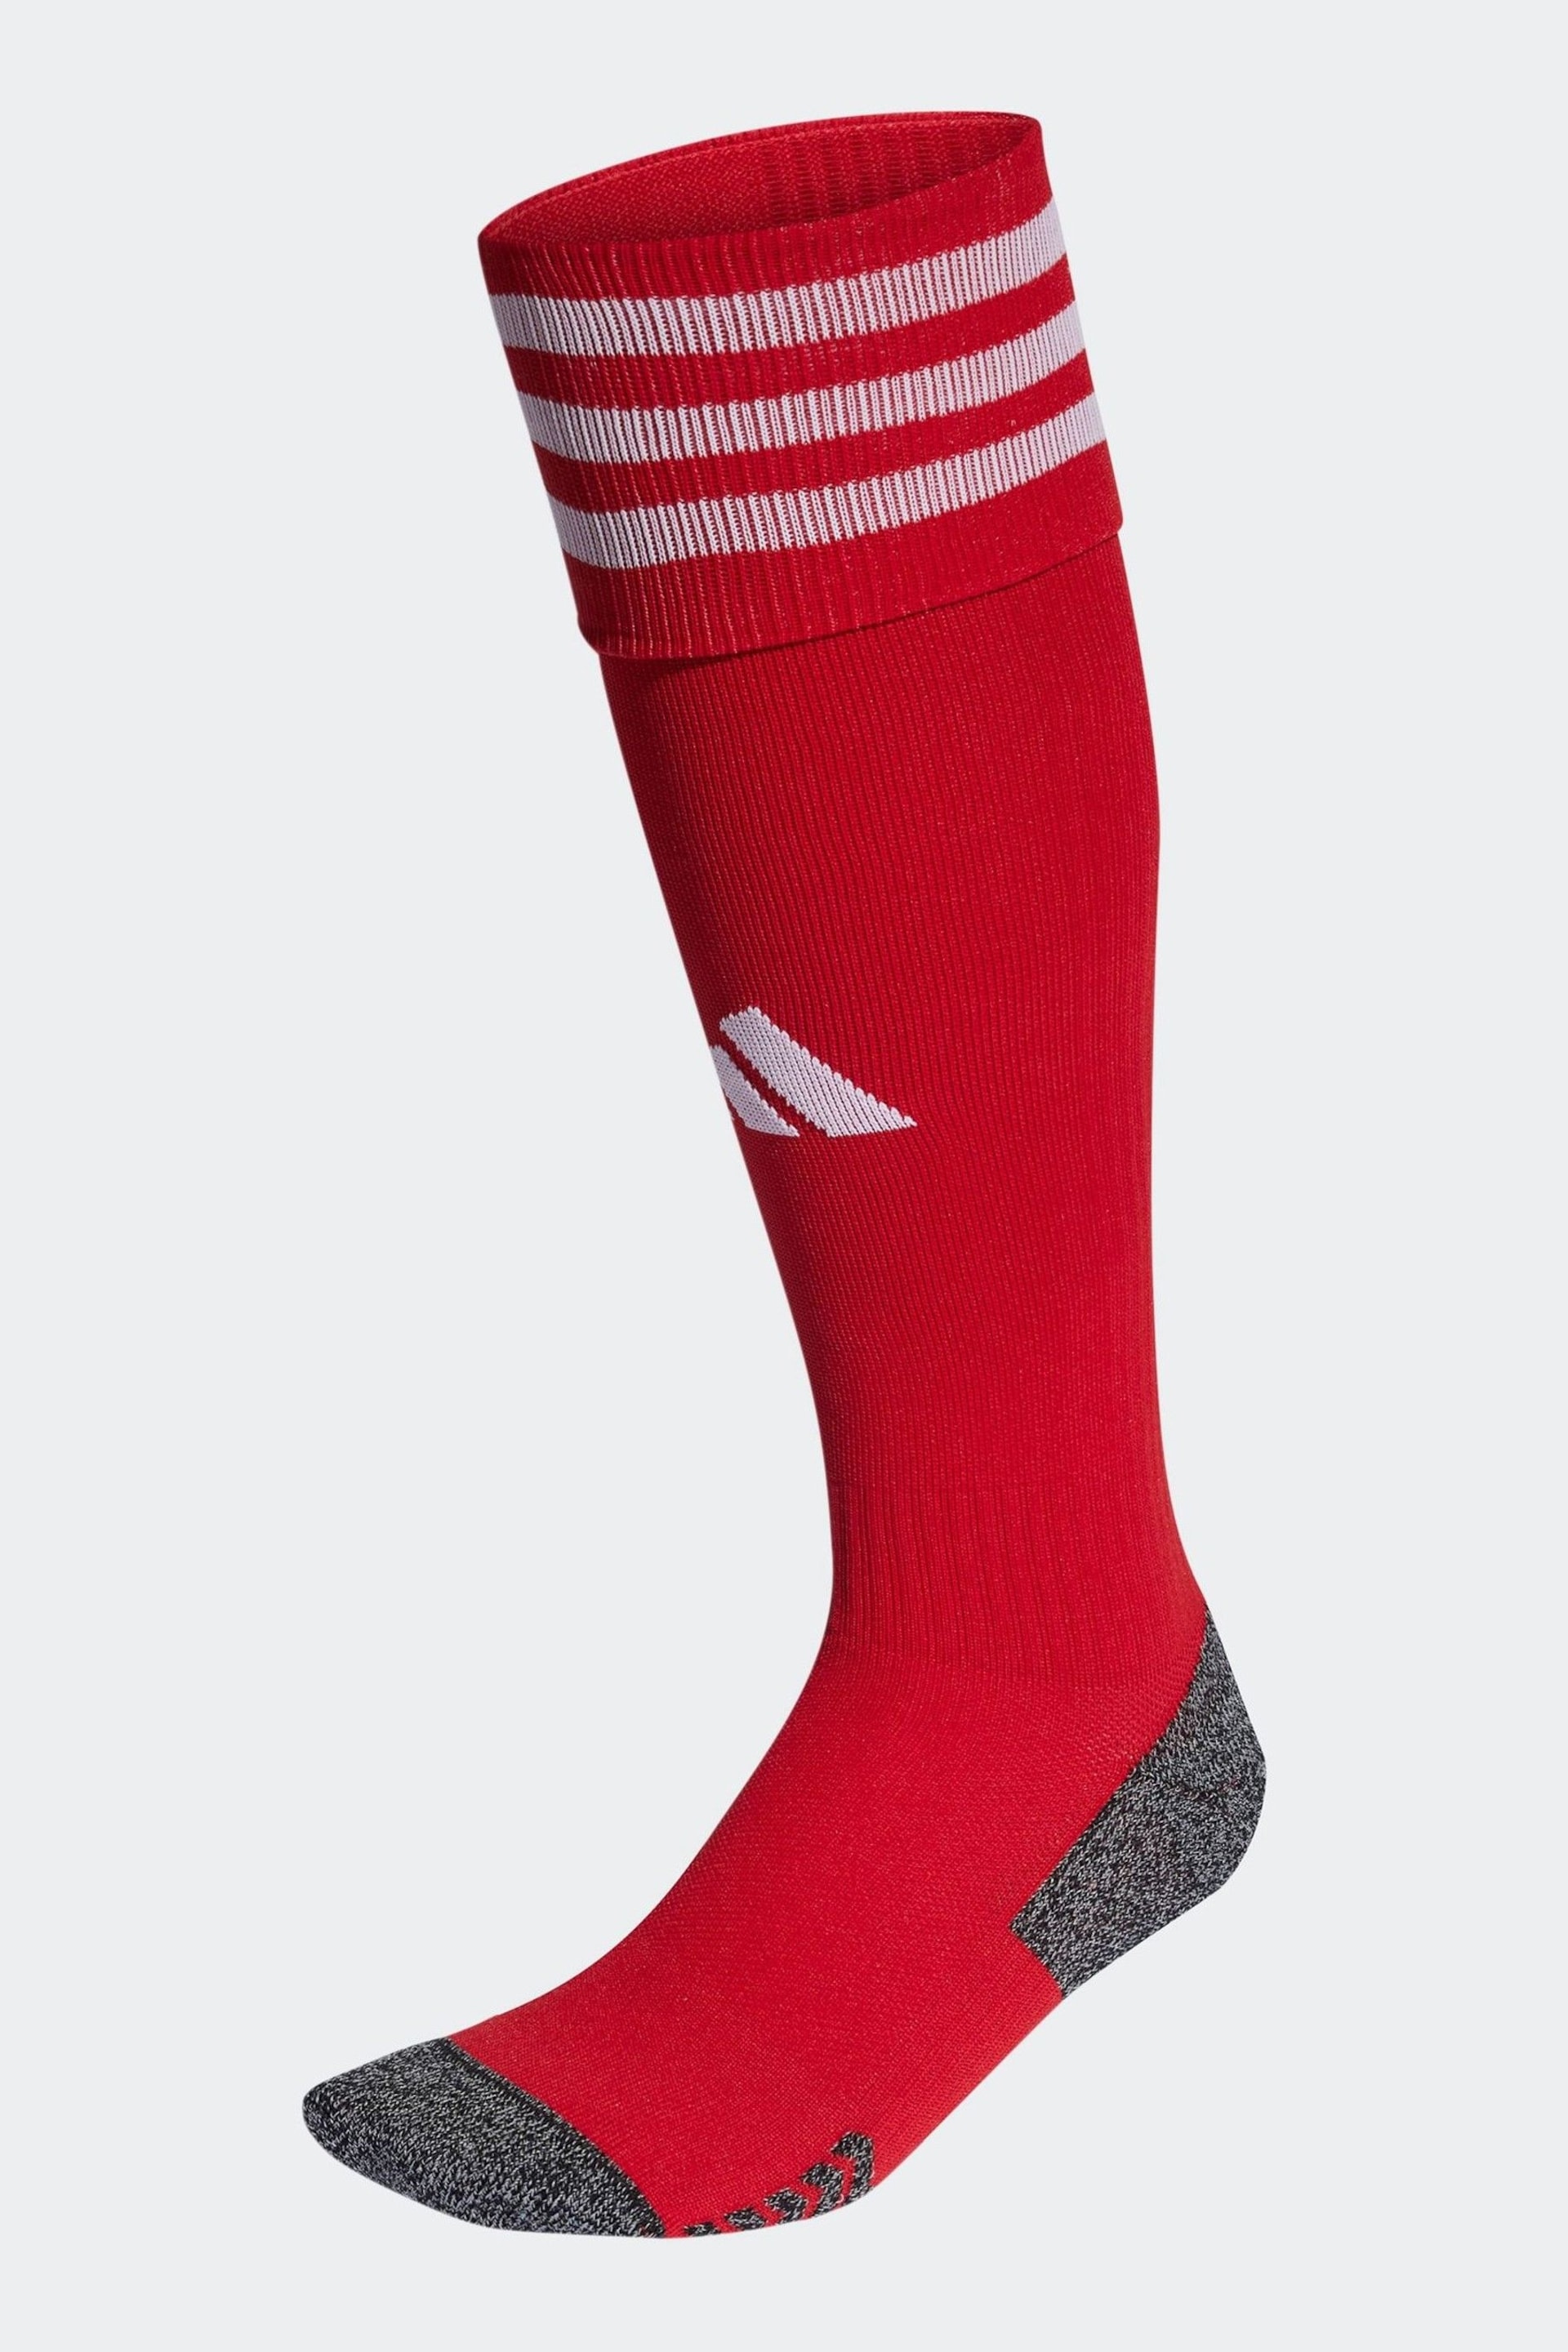 adidas Red Performance Adi 23 Socks - Image 1 of 3